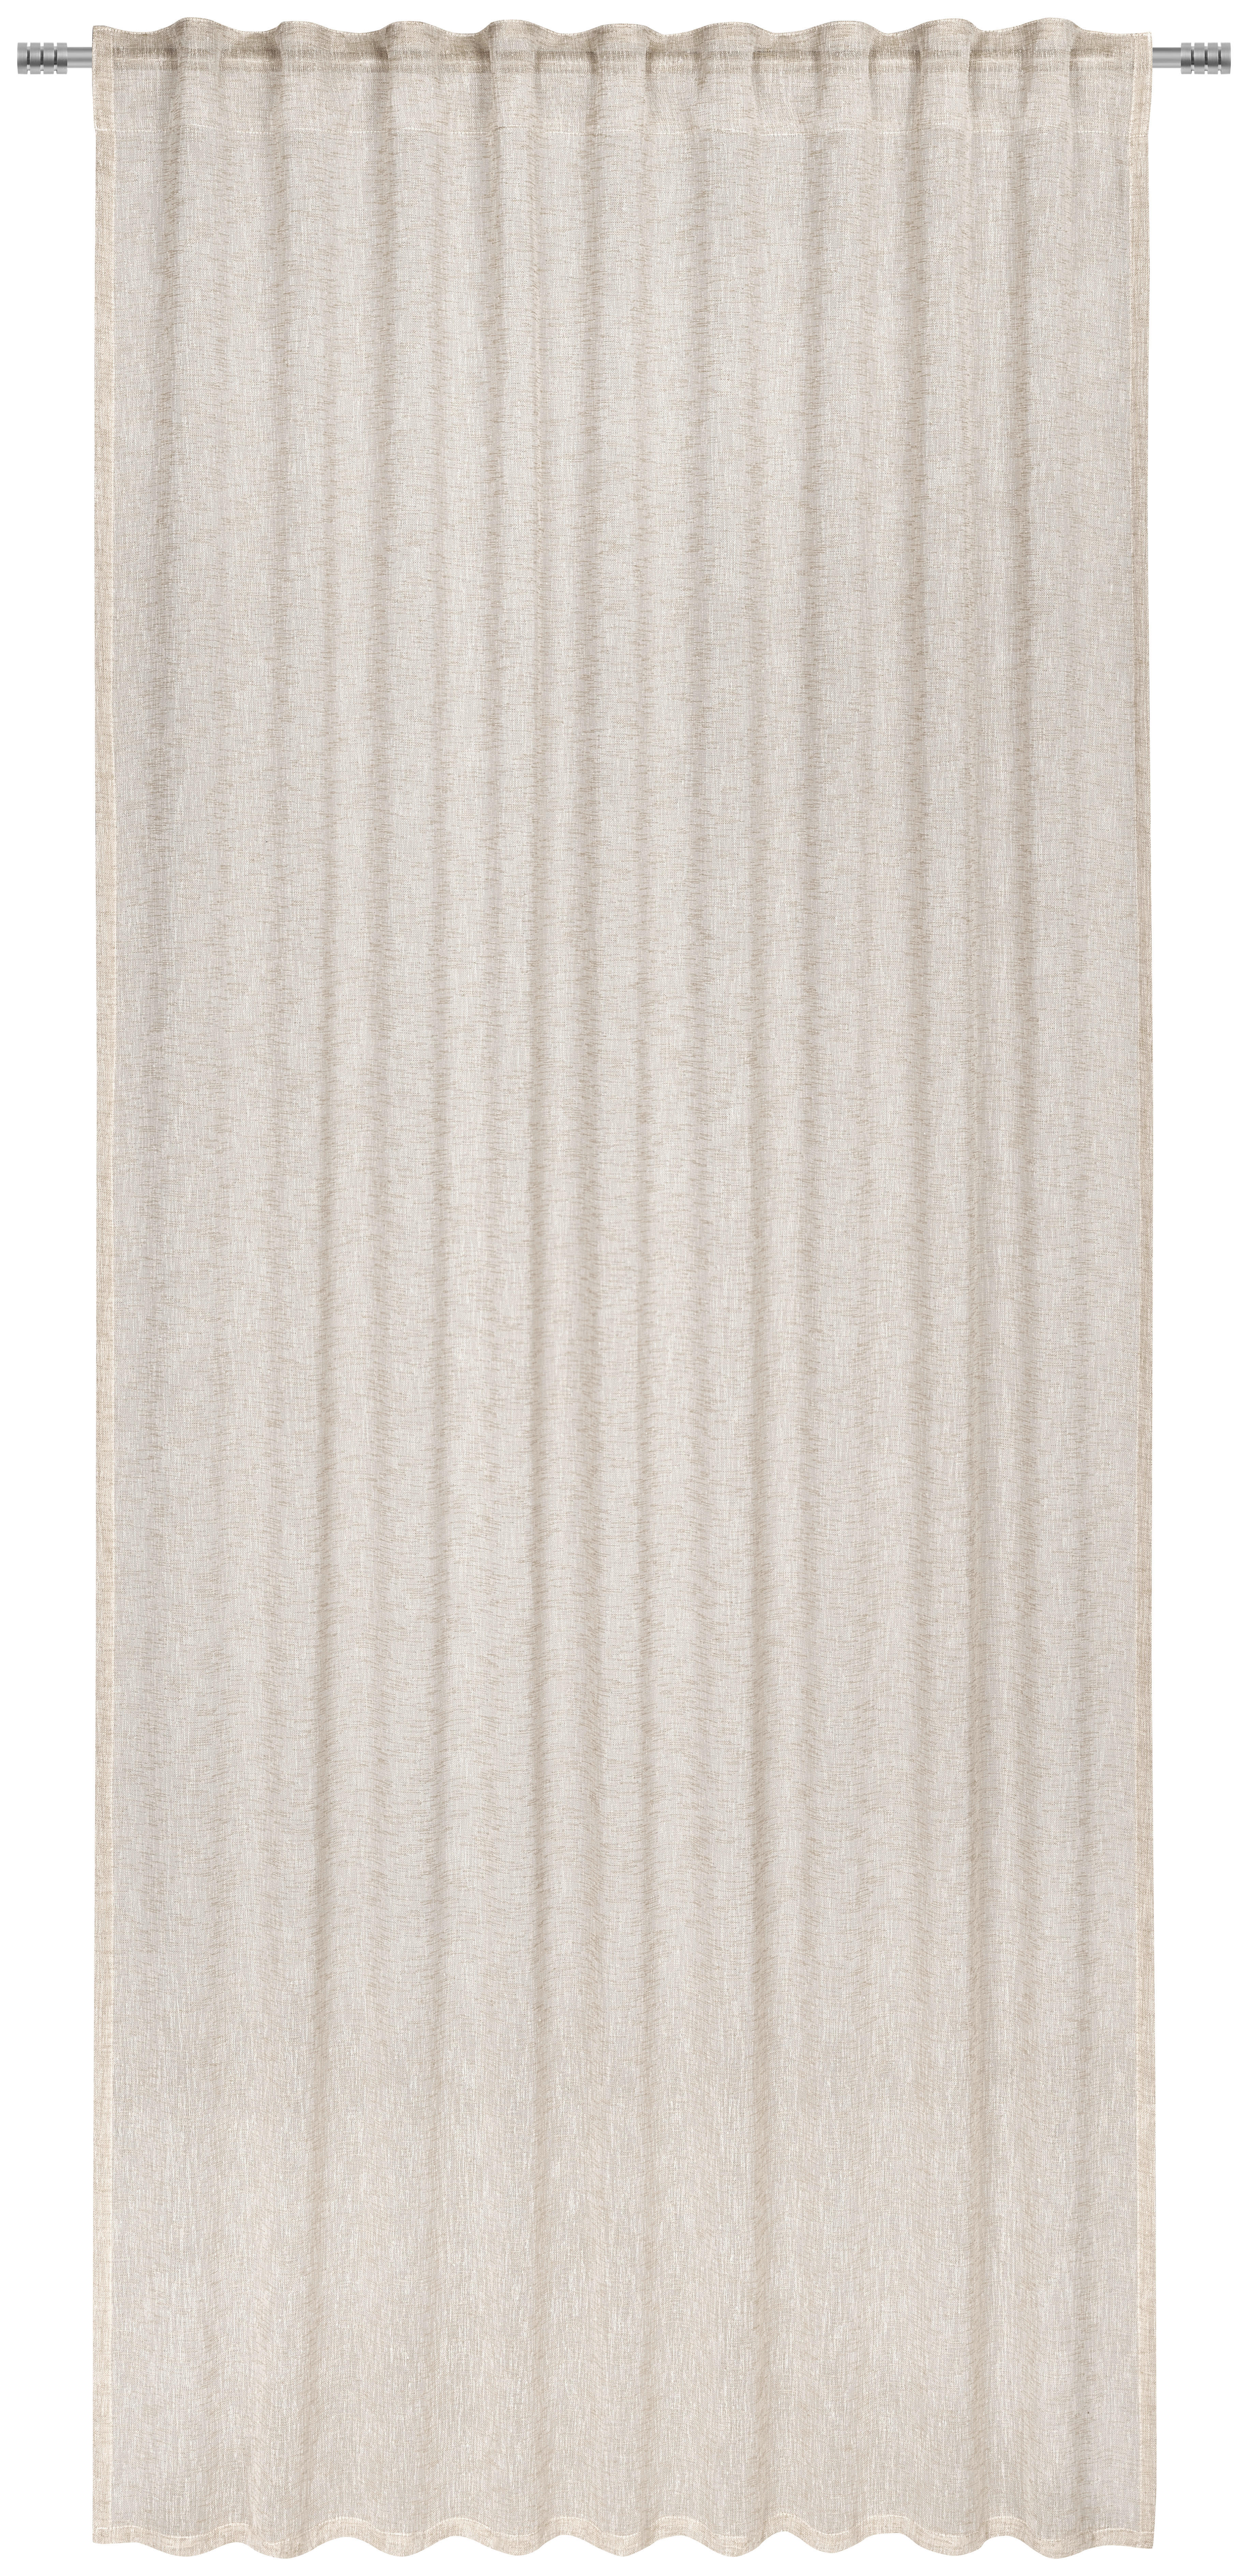 GARDINLÄNGD halvtransparent  - sandfärgad, Basics, textil (140/245cm) - Esposa